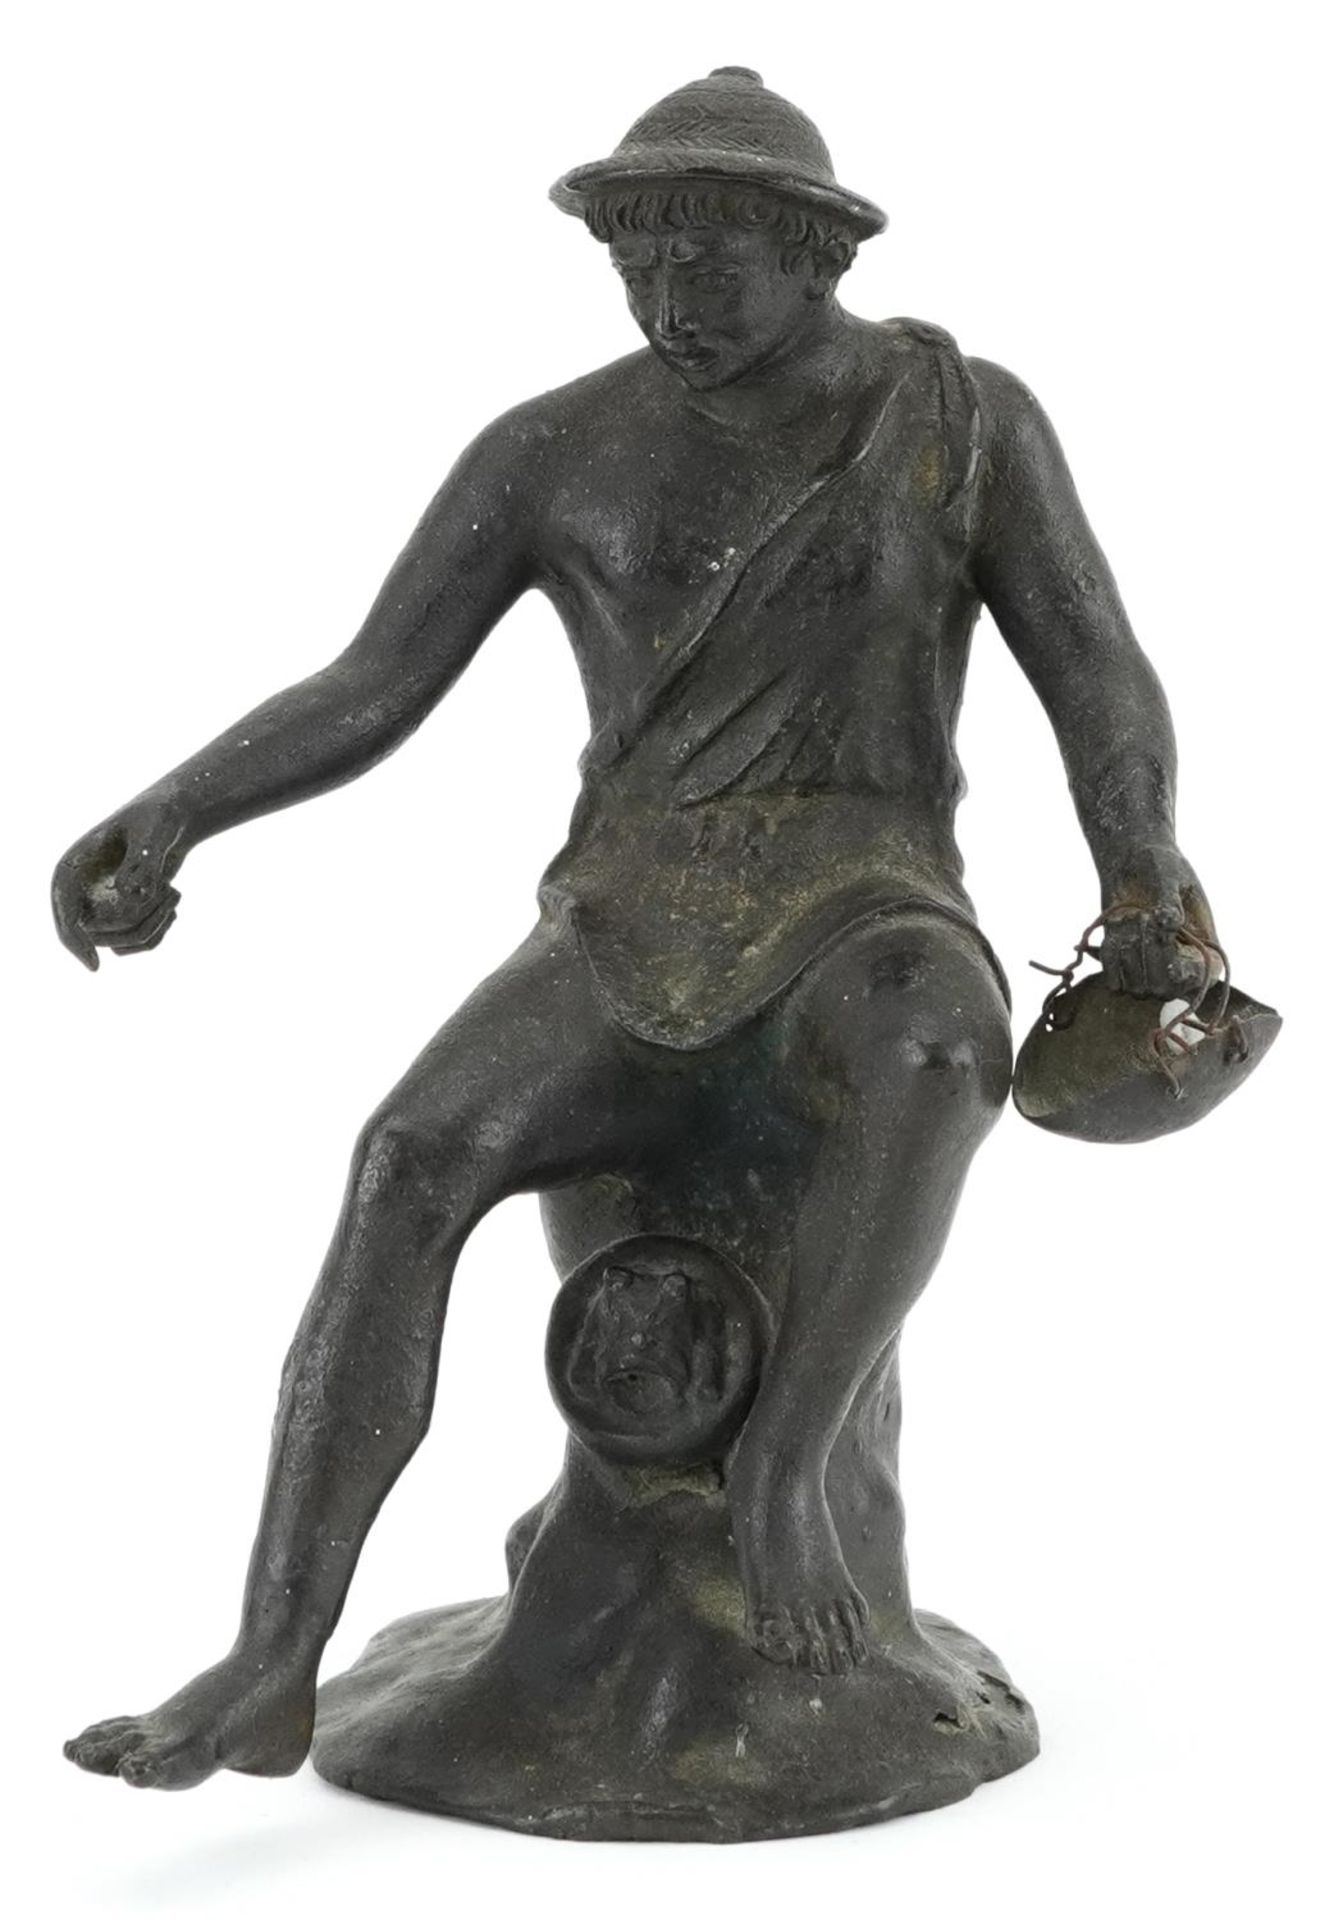 Antique Grand Tour verdigris patinated bronze statue of a Neapolitan fisherman, 20cm high